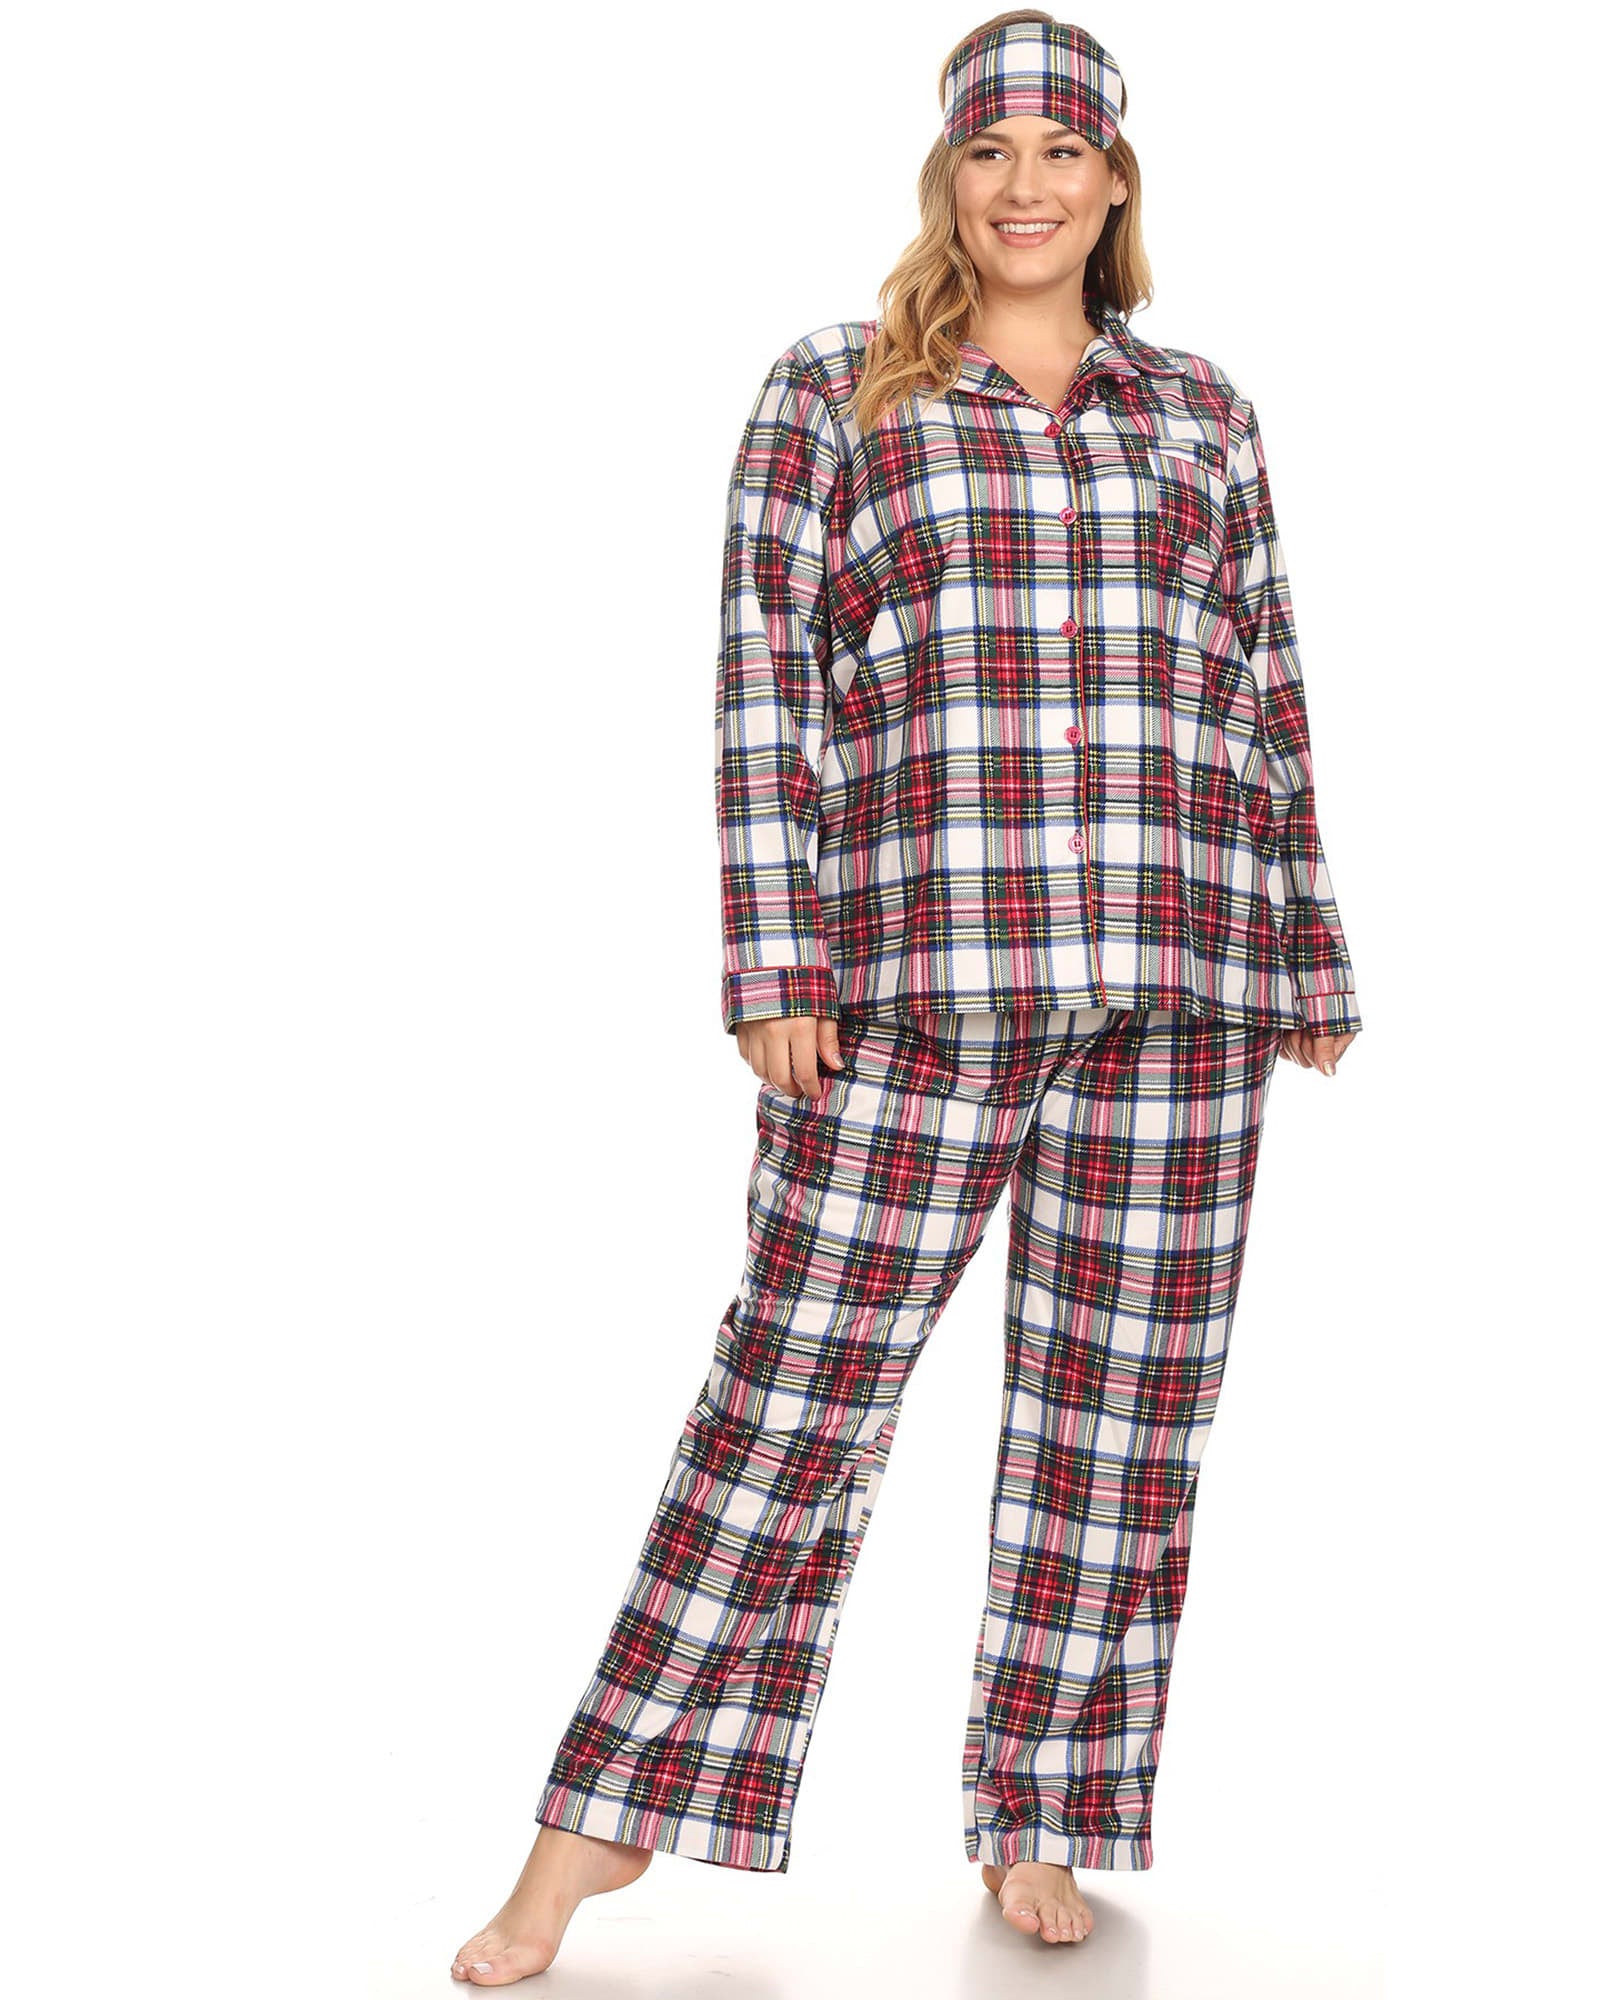 Colorful Pajama Sets